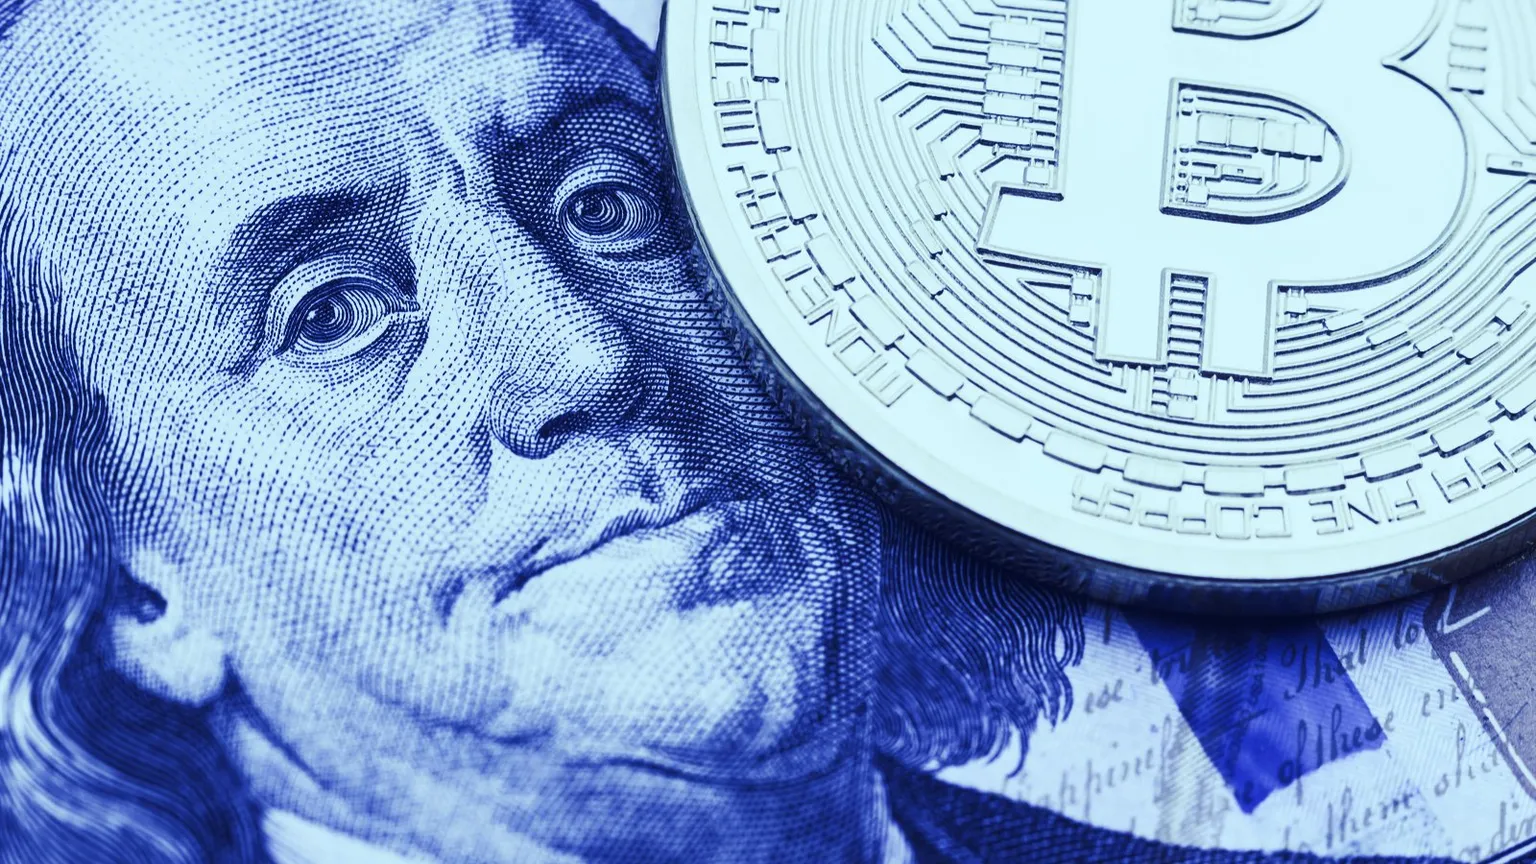 A Bitcoin on a 100 dollar bill. (Image: Shutterstock)